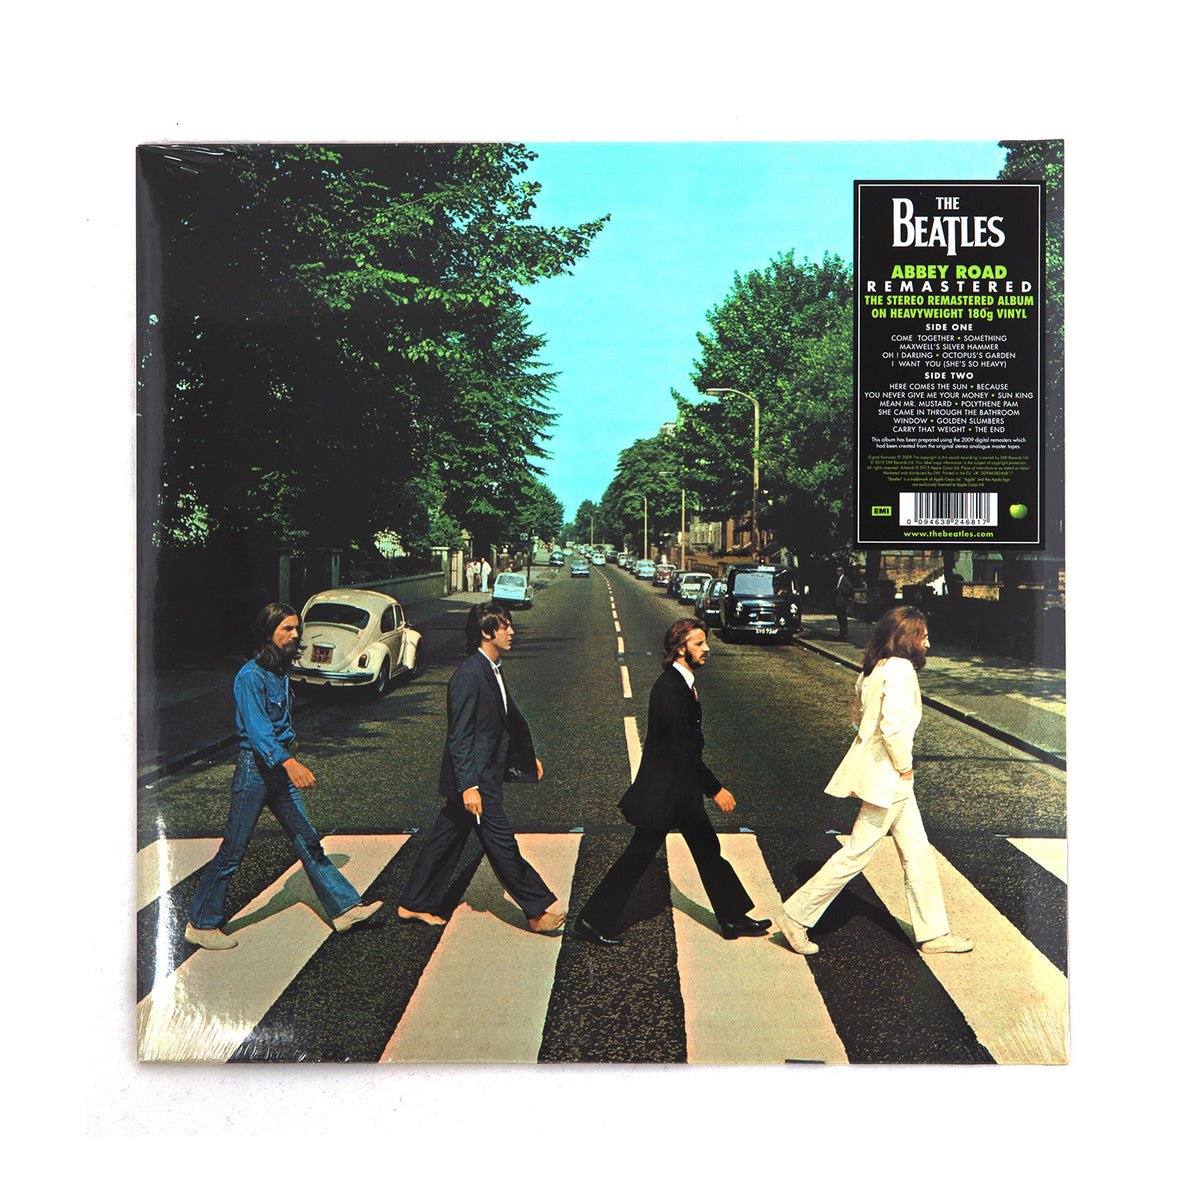 The Beatles - Abbey Road -Hq/Remastered- LP - Concrete